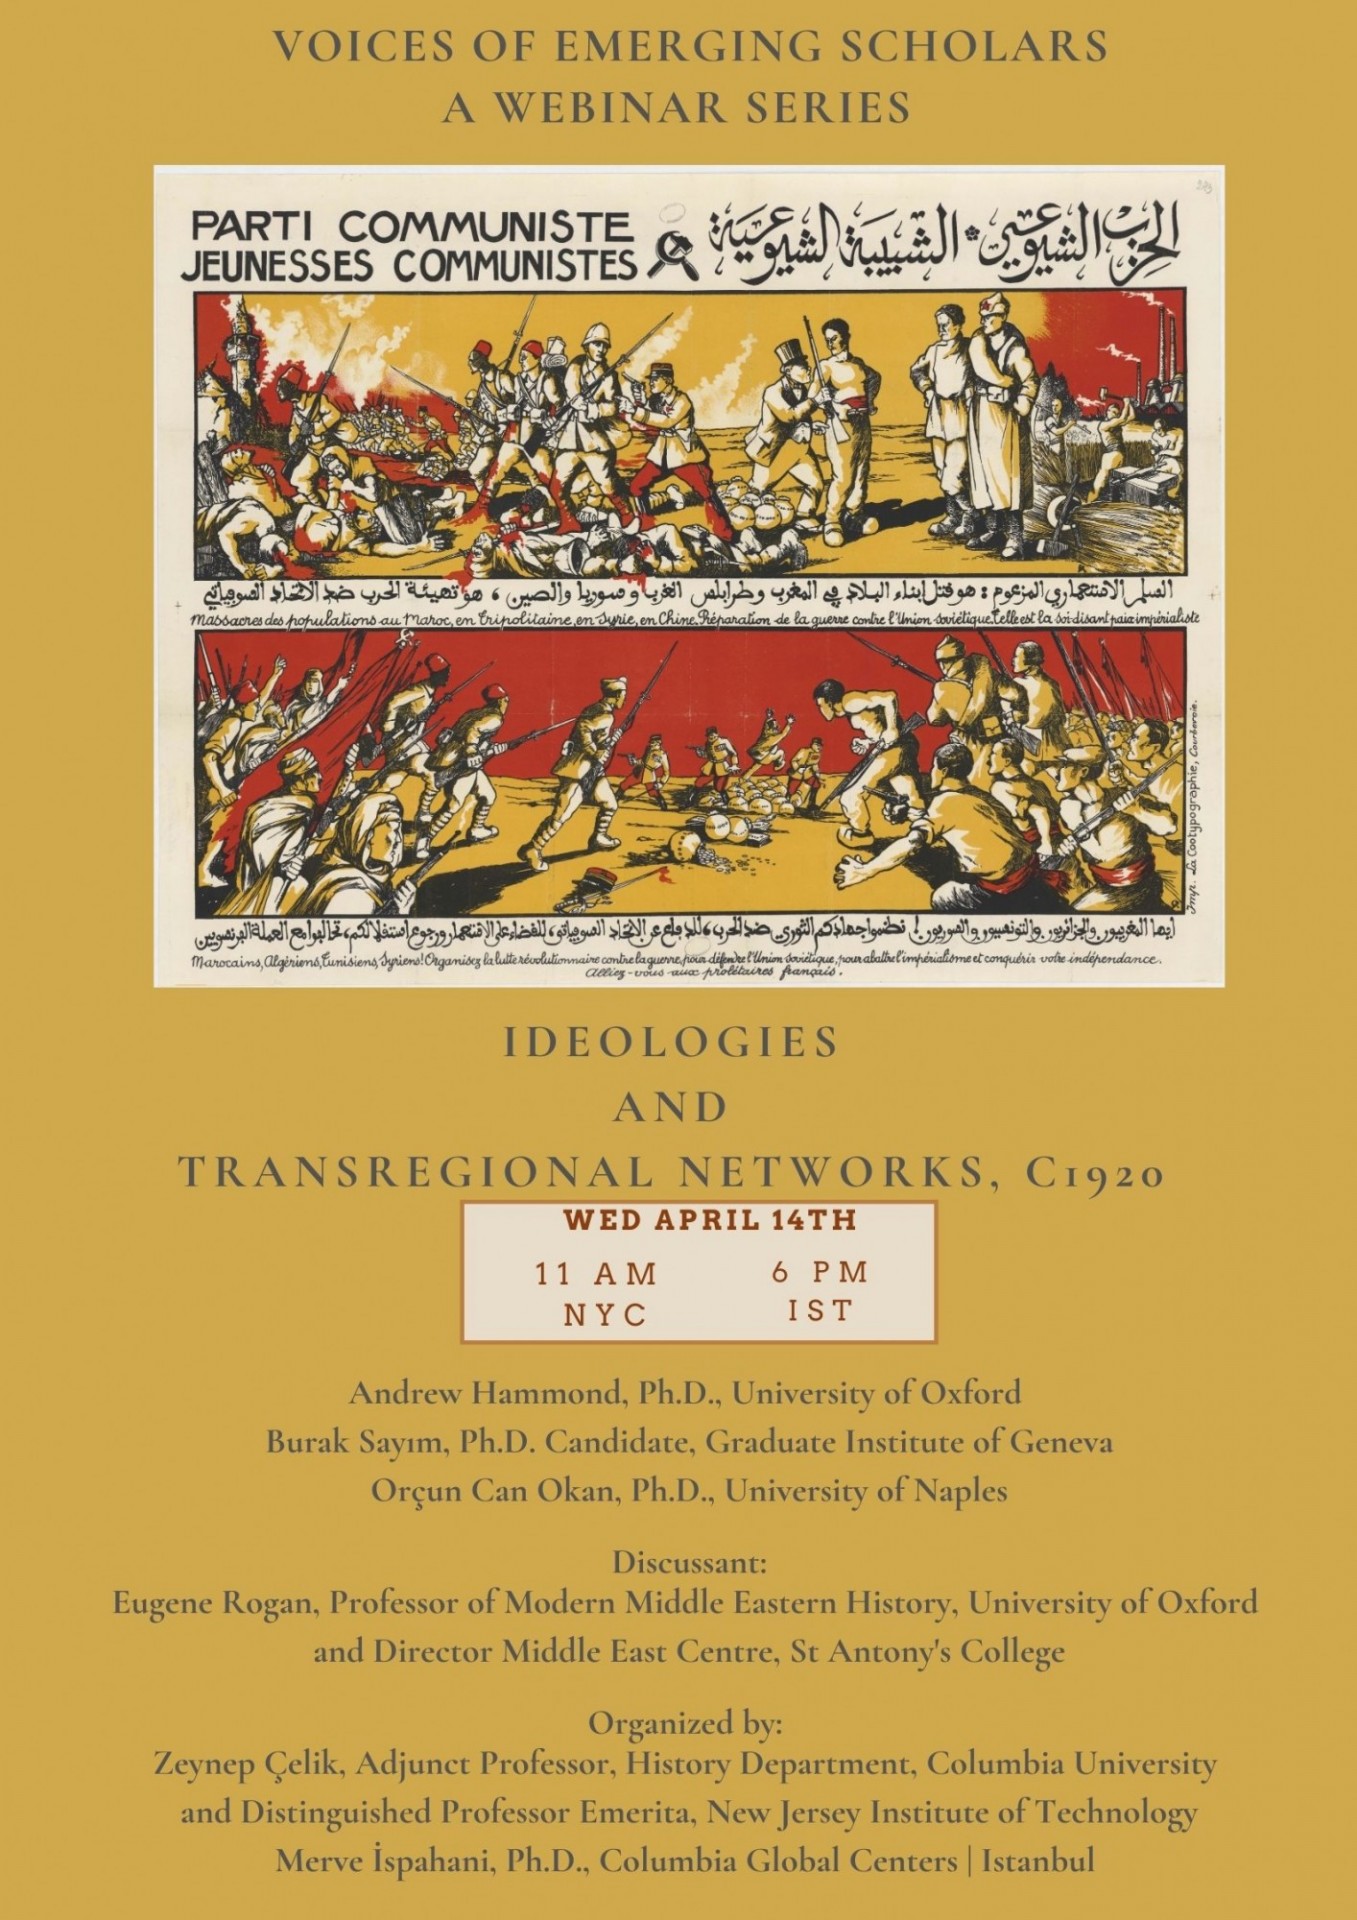 Ideologies and Transregional Networks, c1920 - Voices of Emerging Scholars Webinar Series 